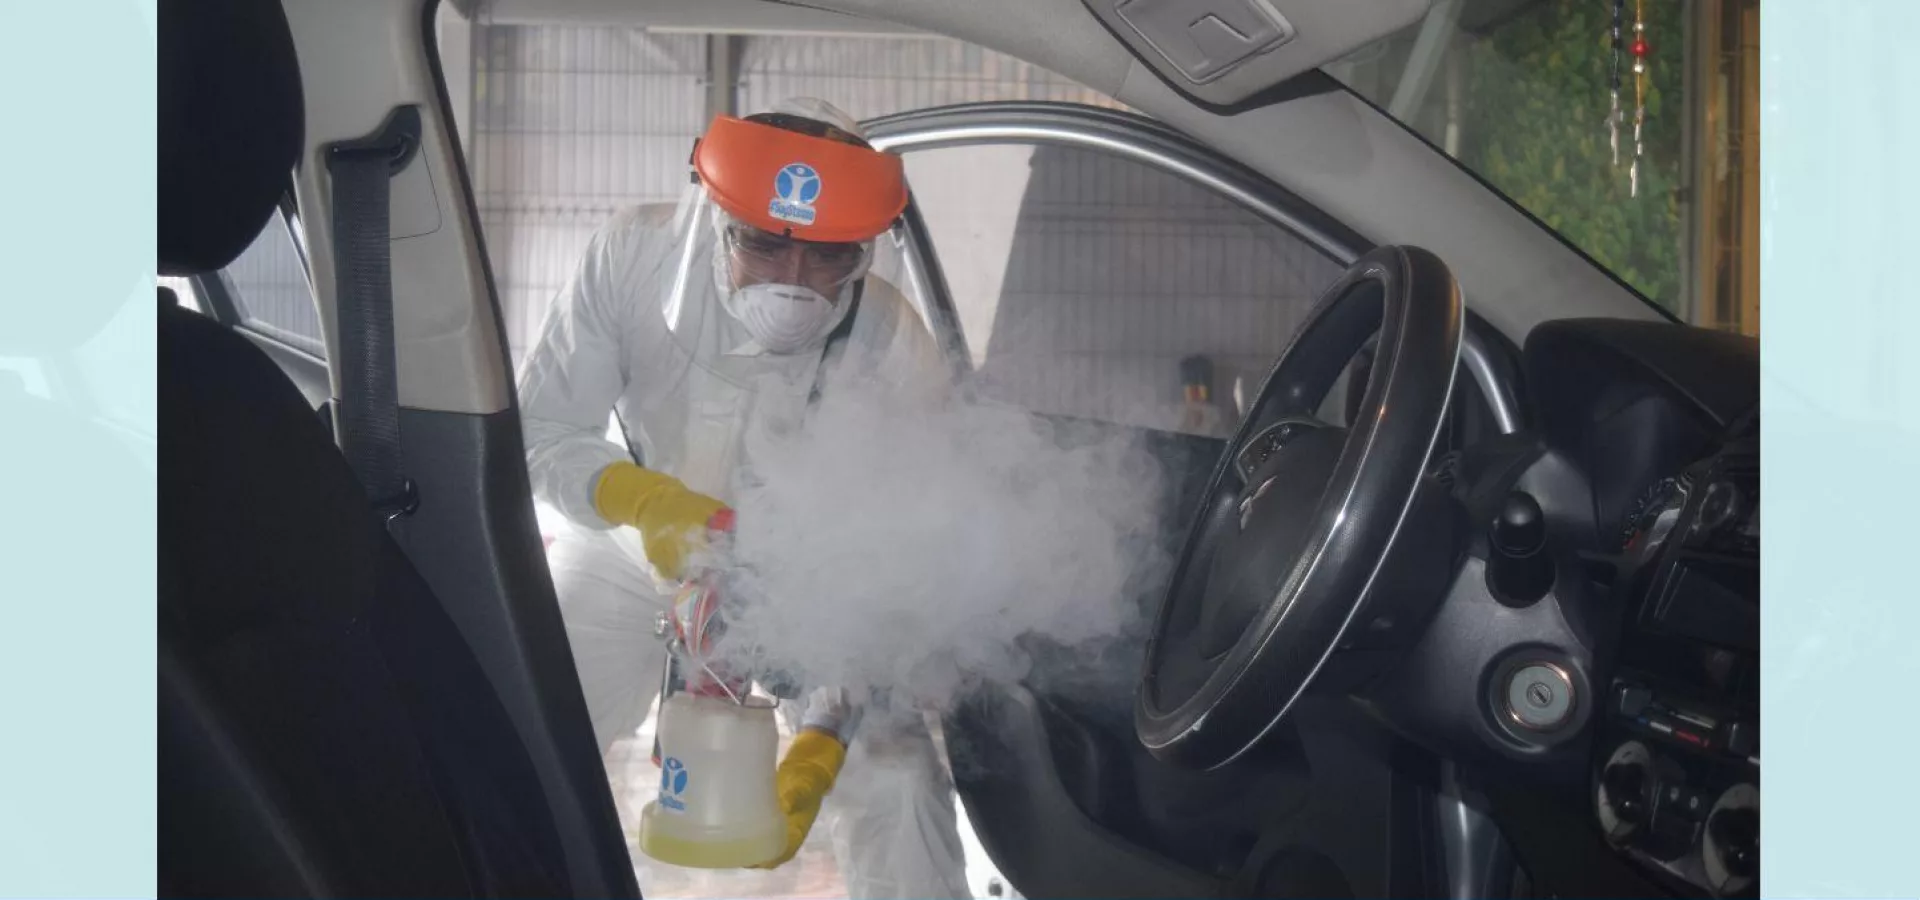 5 productos para limpiar tu coche frente al Coronavirus